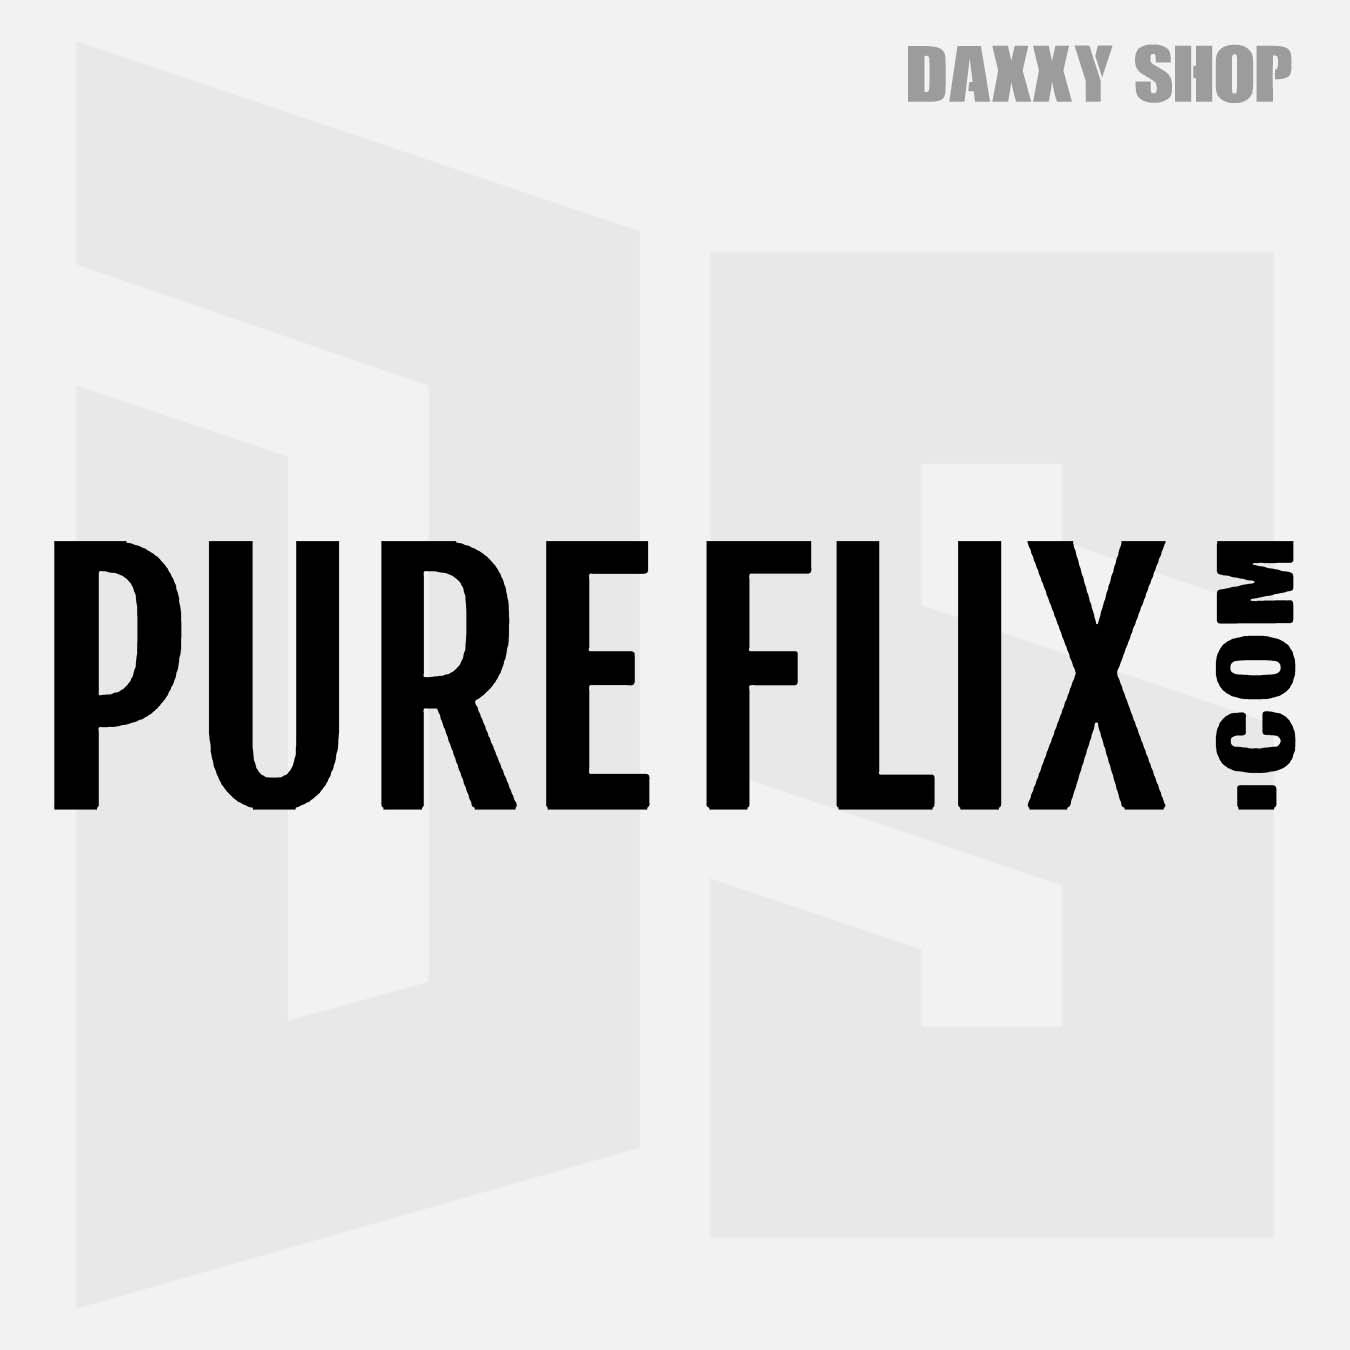 PureFlix - daxxyshop.com